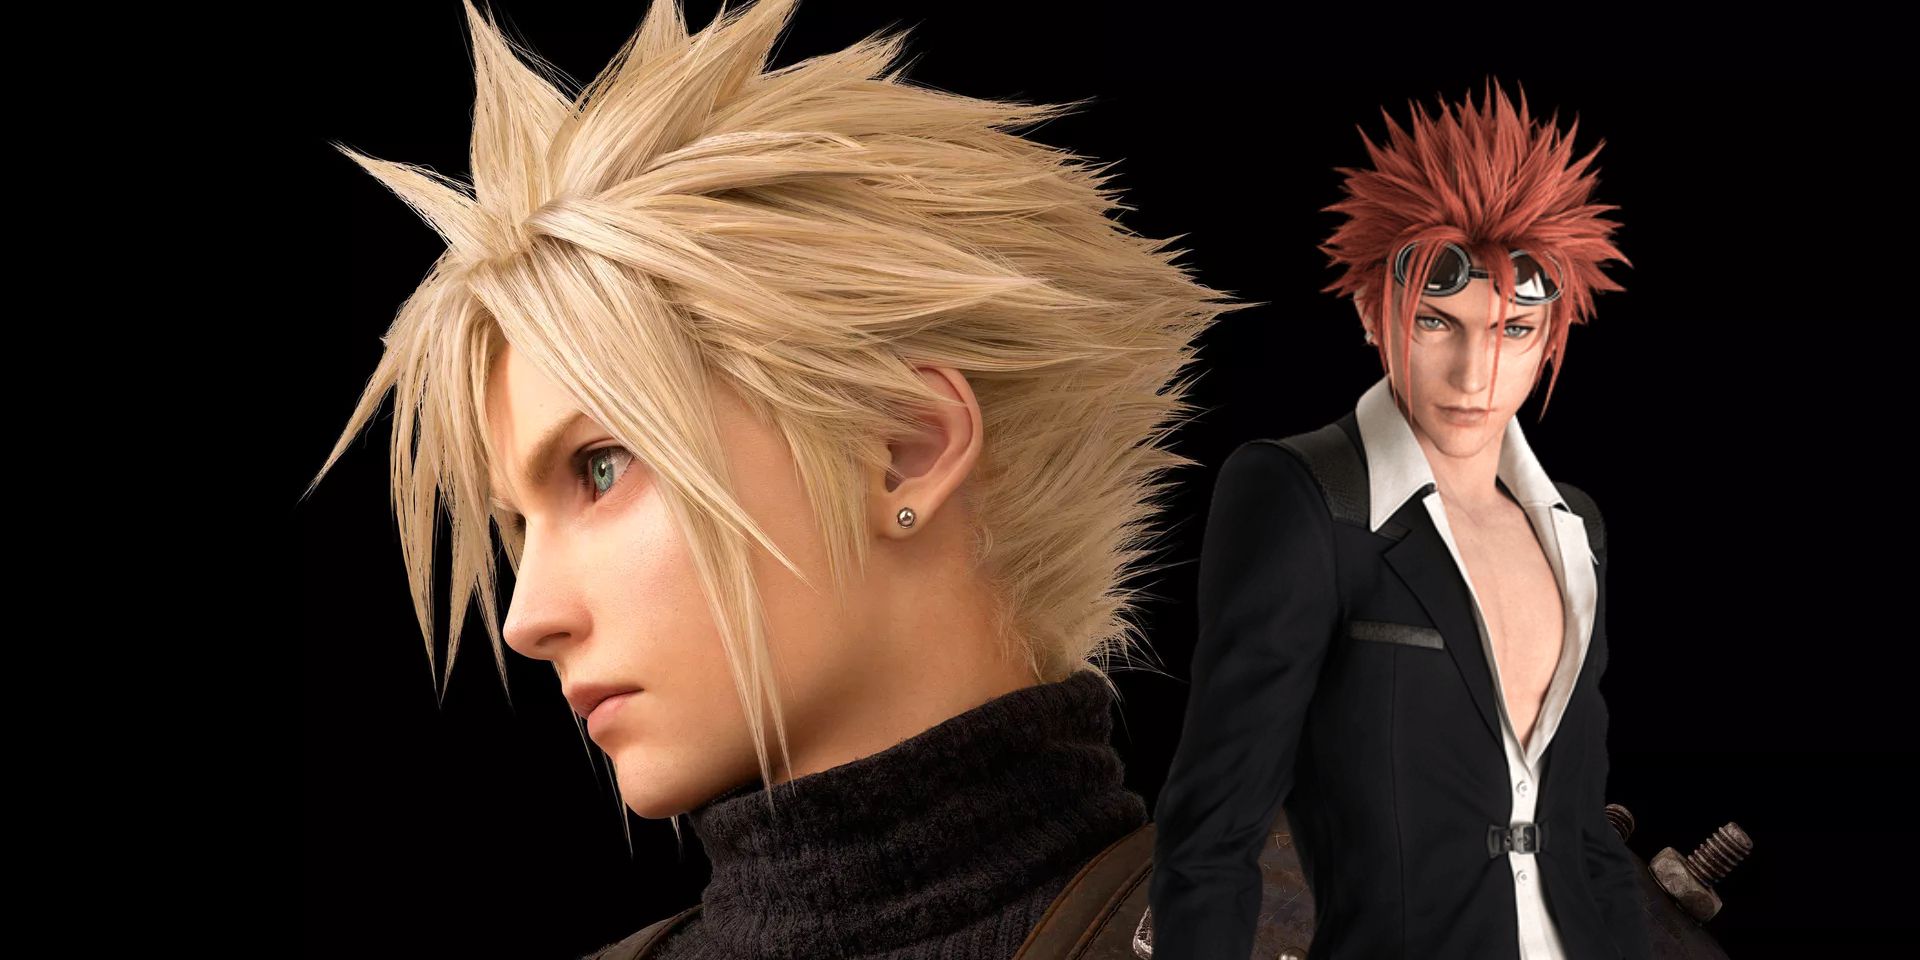 Final Fantasy 7 Remake's Hair Is Bad